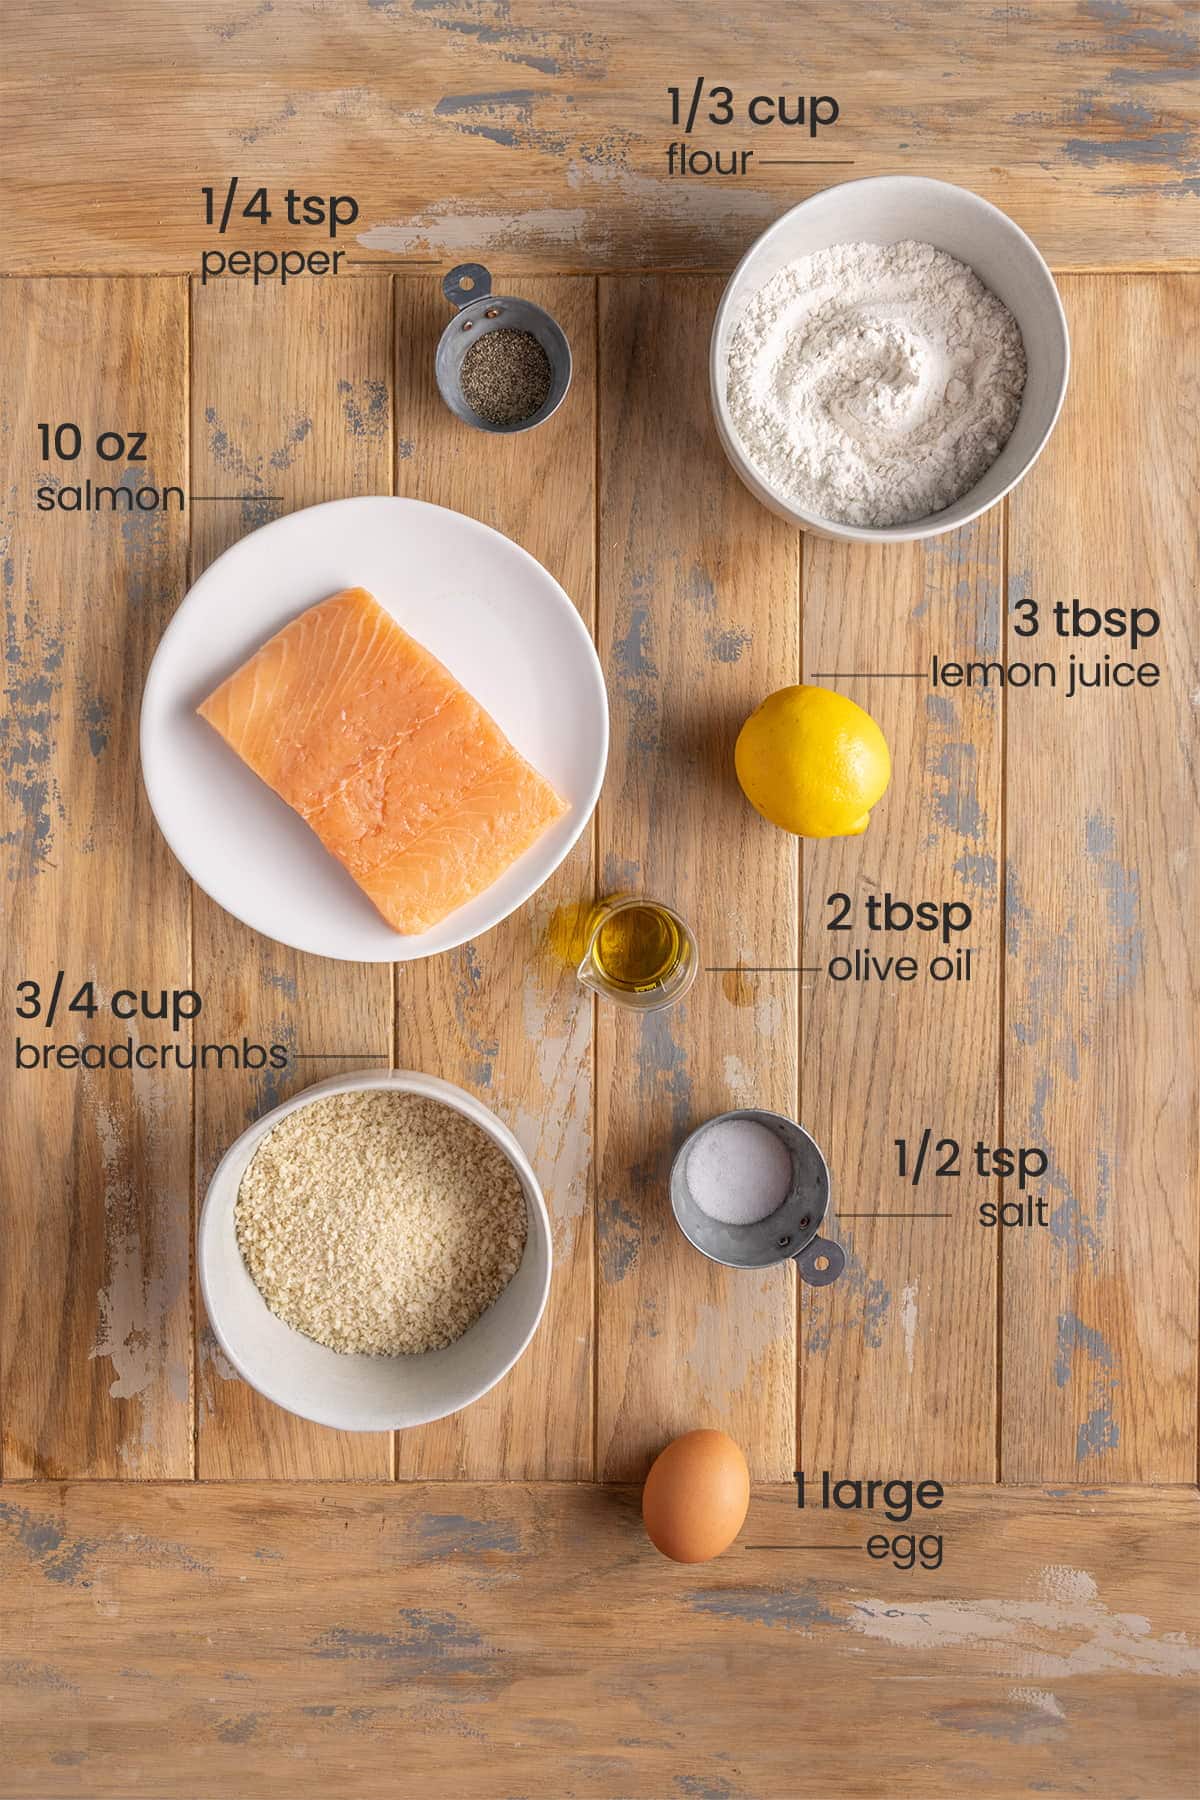 ingredients for salmon nuggets - flour, pepper, salmon, lemon juice, olive oil, breadcrumbs, salt, egg